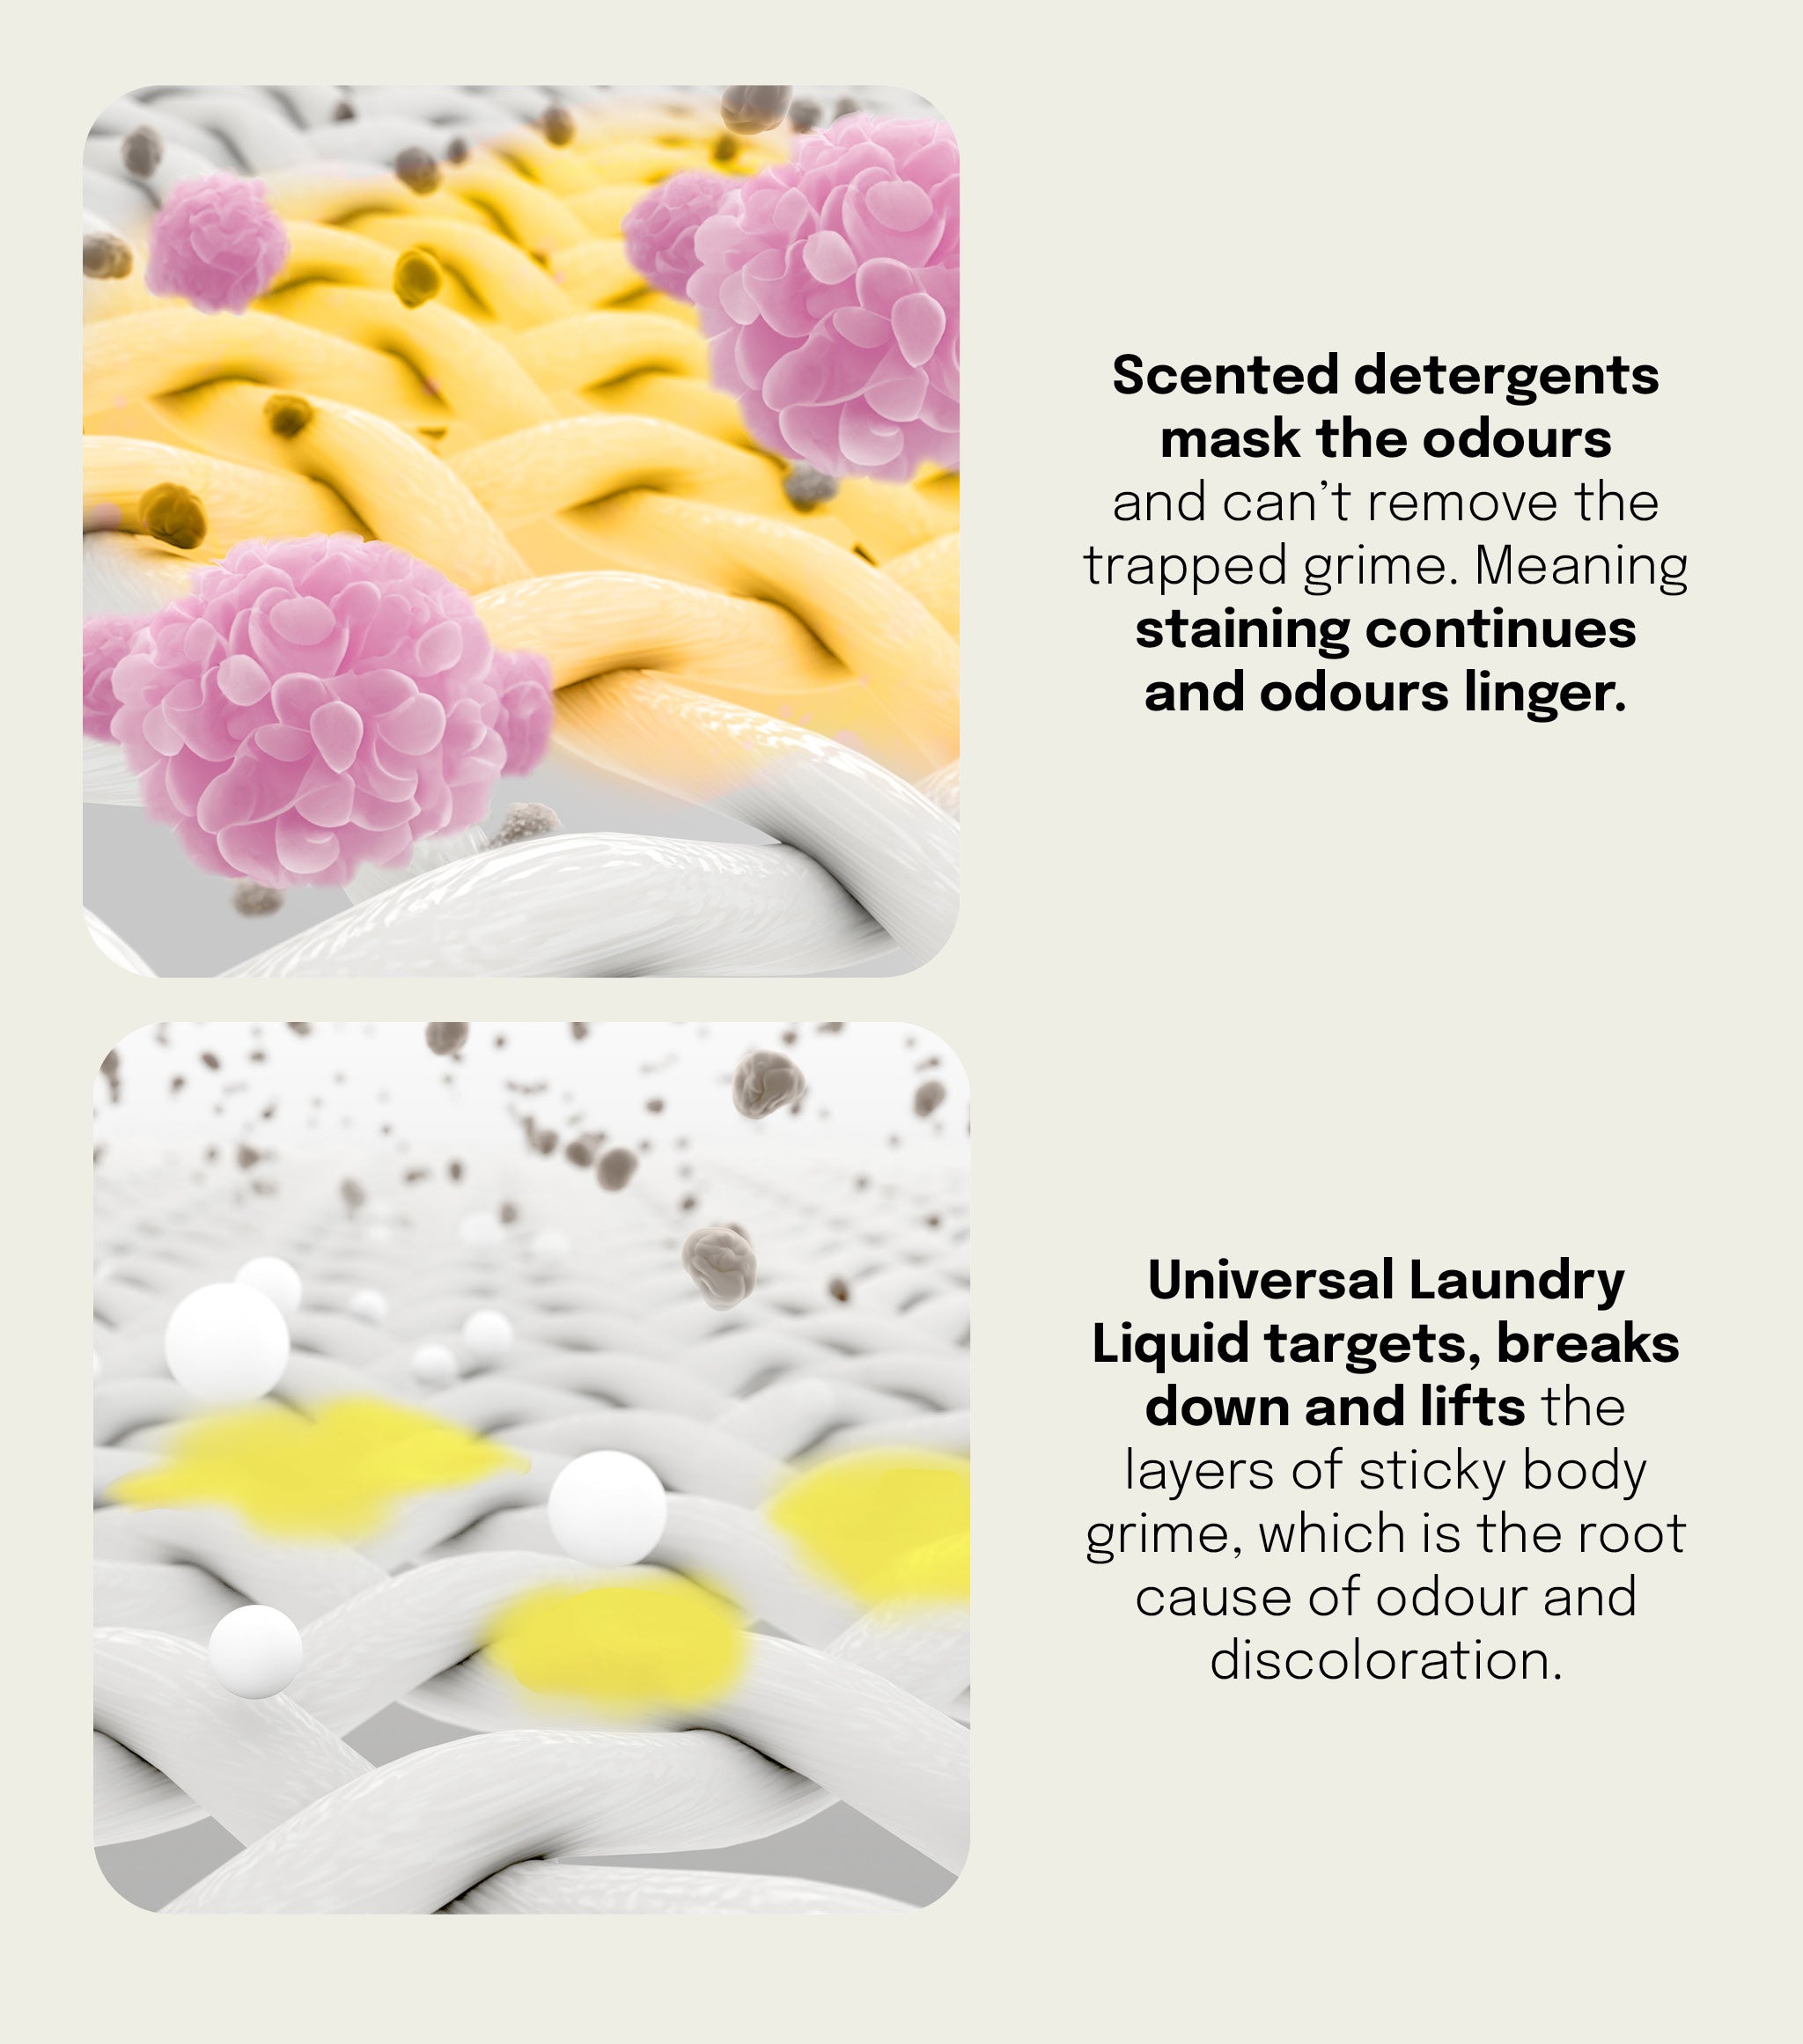 Universal Laundry Liquid